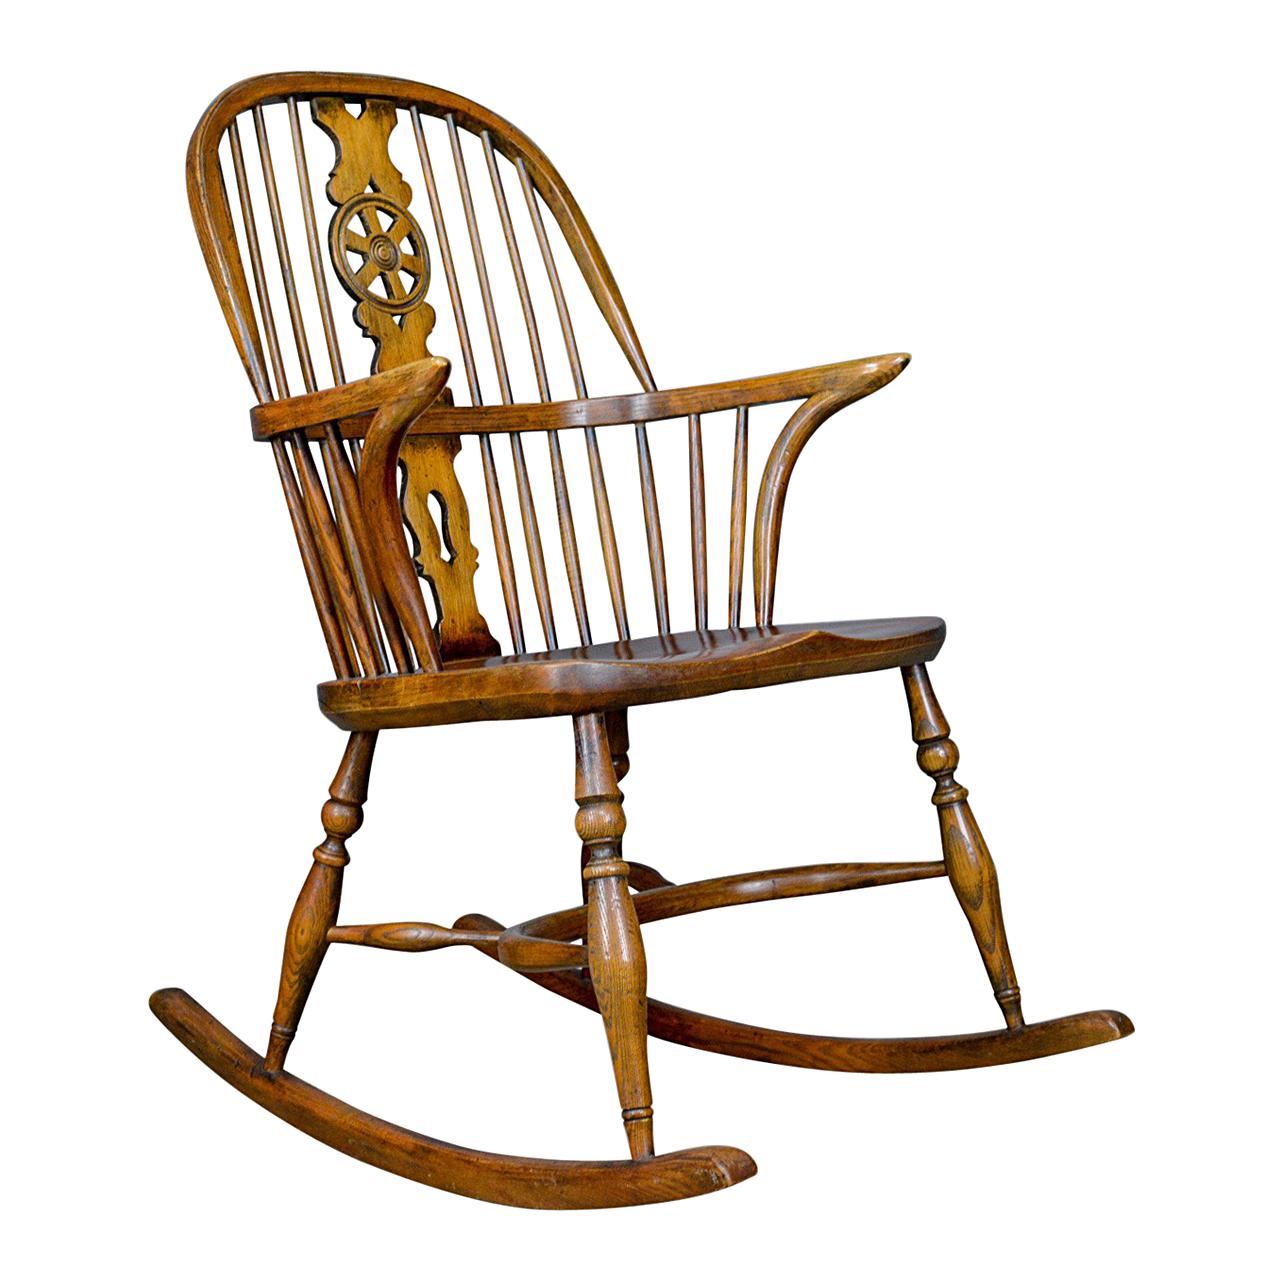 Antique Rocking Chair, English, Edwardian, Windsor Stick Back, Elbow, circa 1910